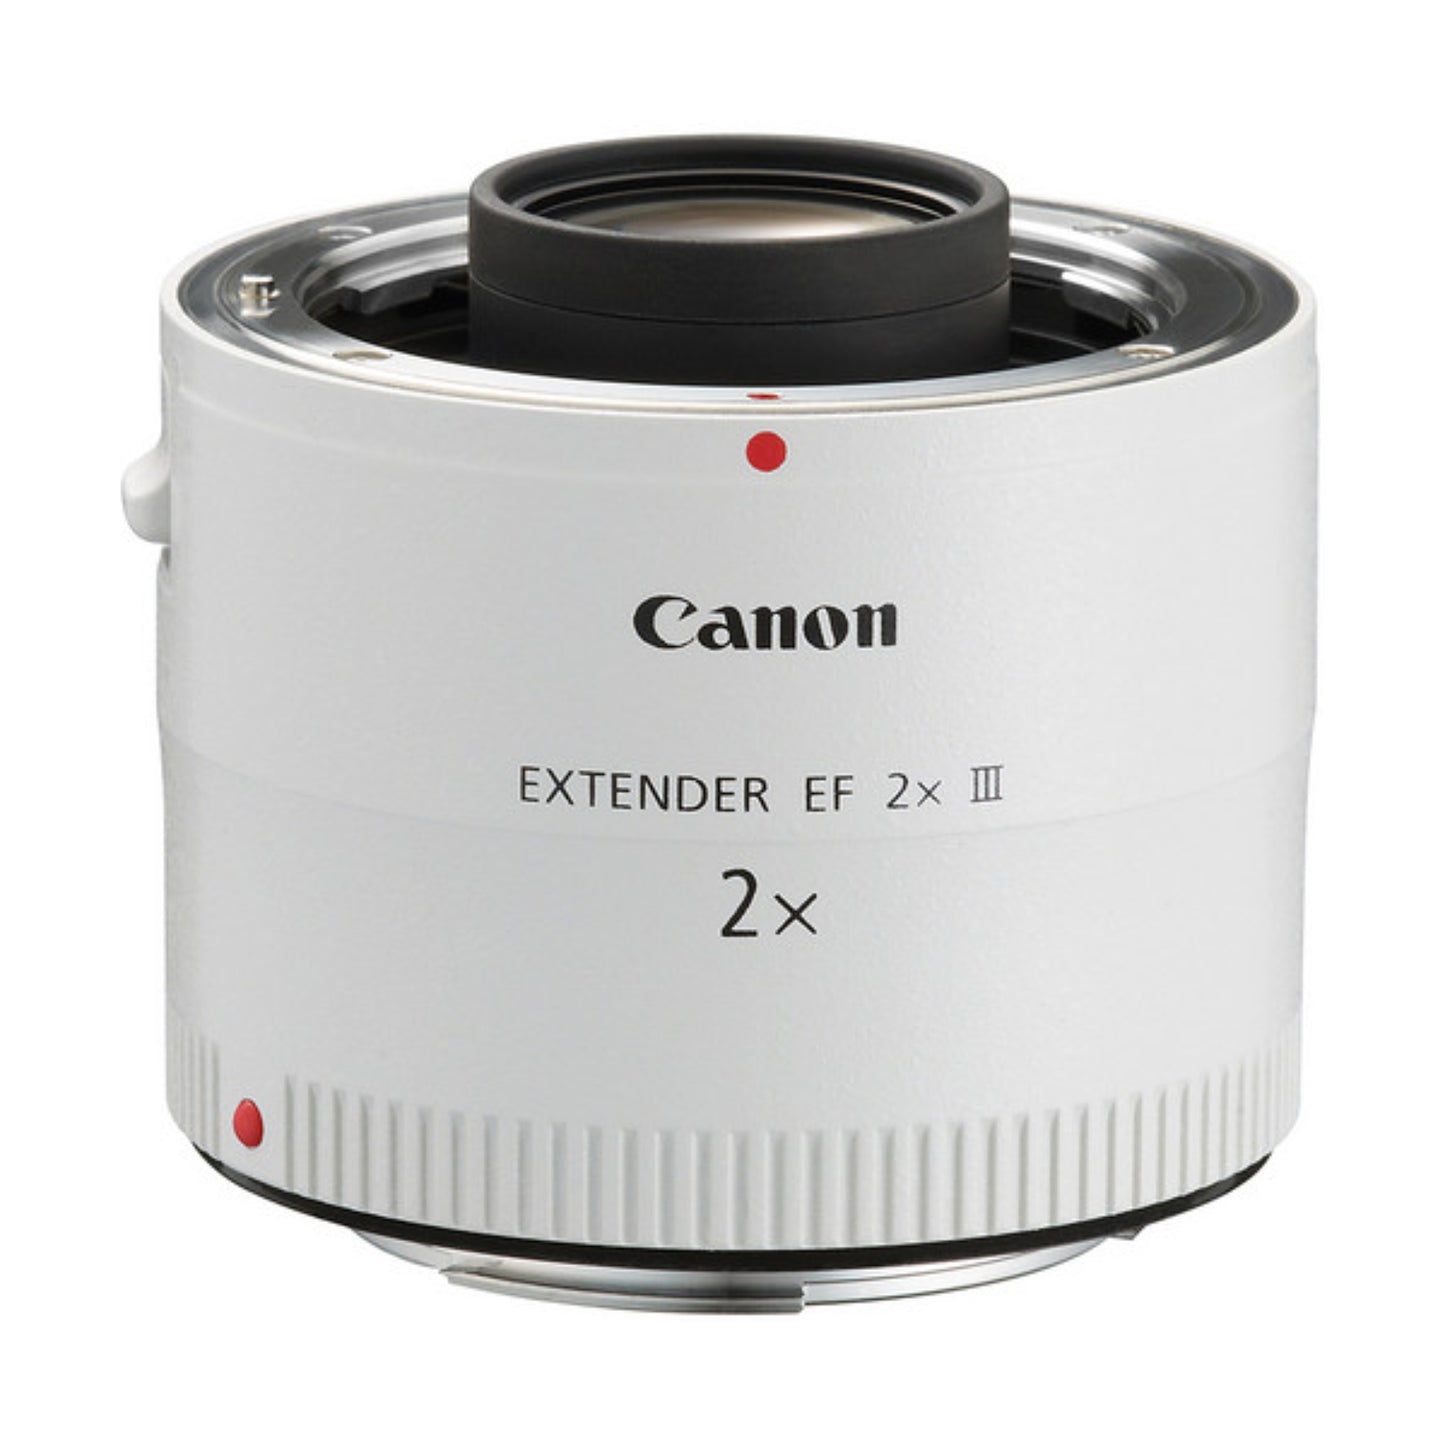 Canon 2x Series III Tele converter at Topic Rentals